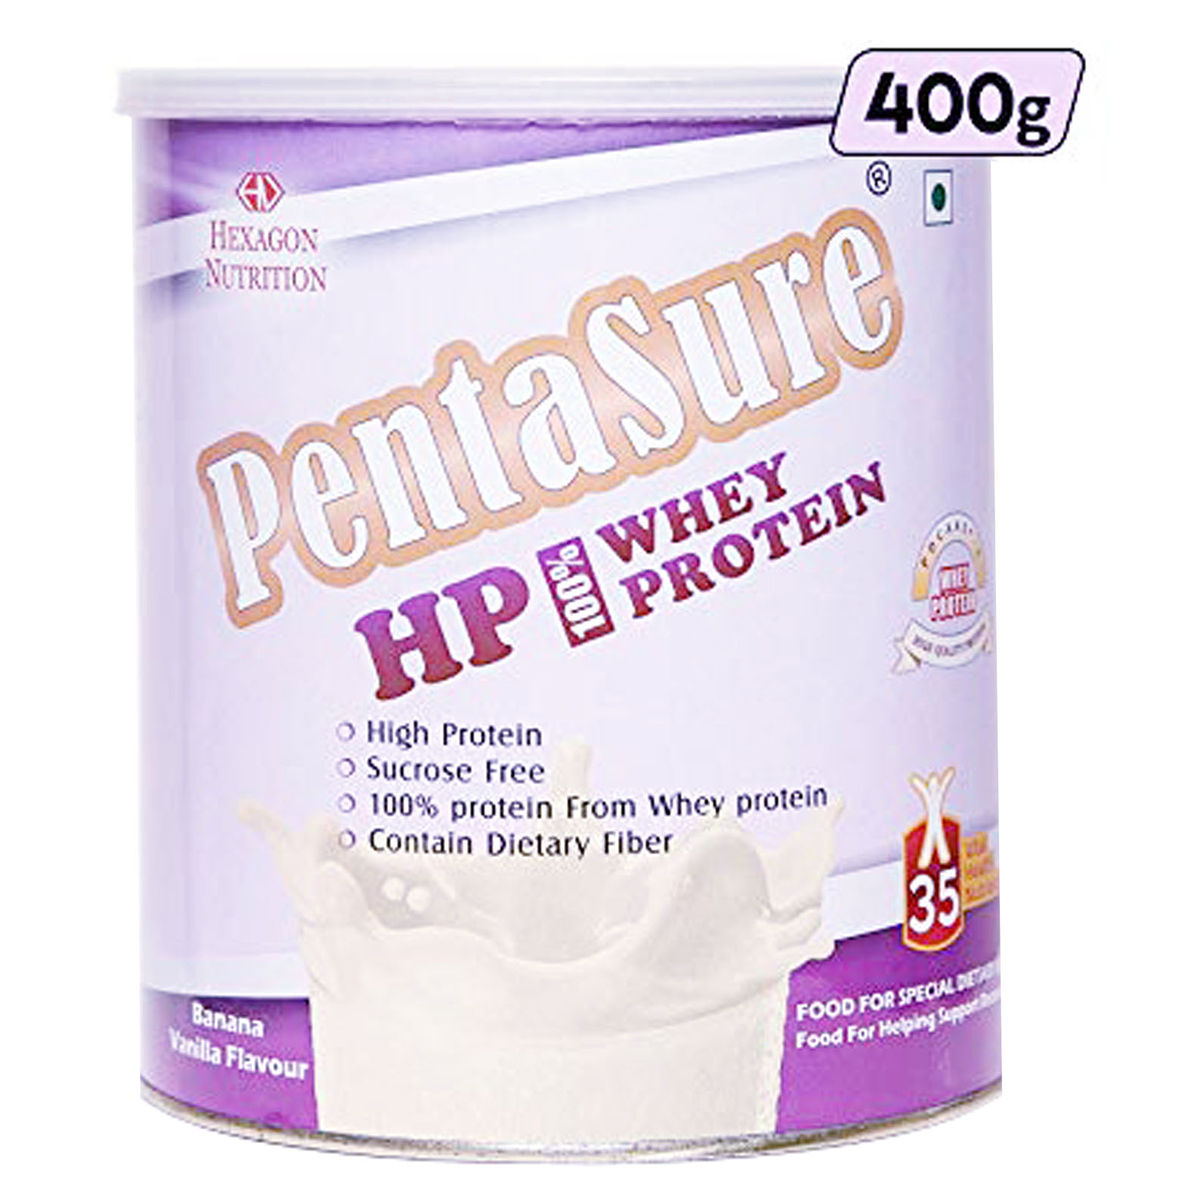 Buy Pentasure HP Banana & Vanilla Flavour Whey Protein Powder, 400 gm Tin Online